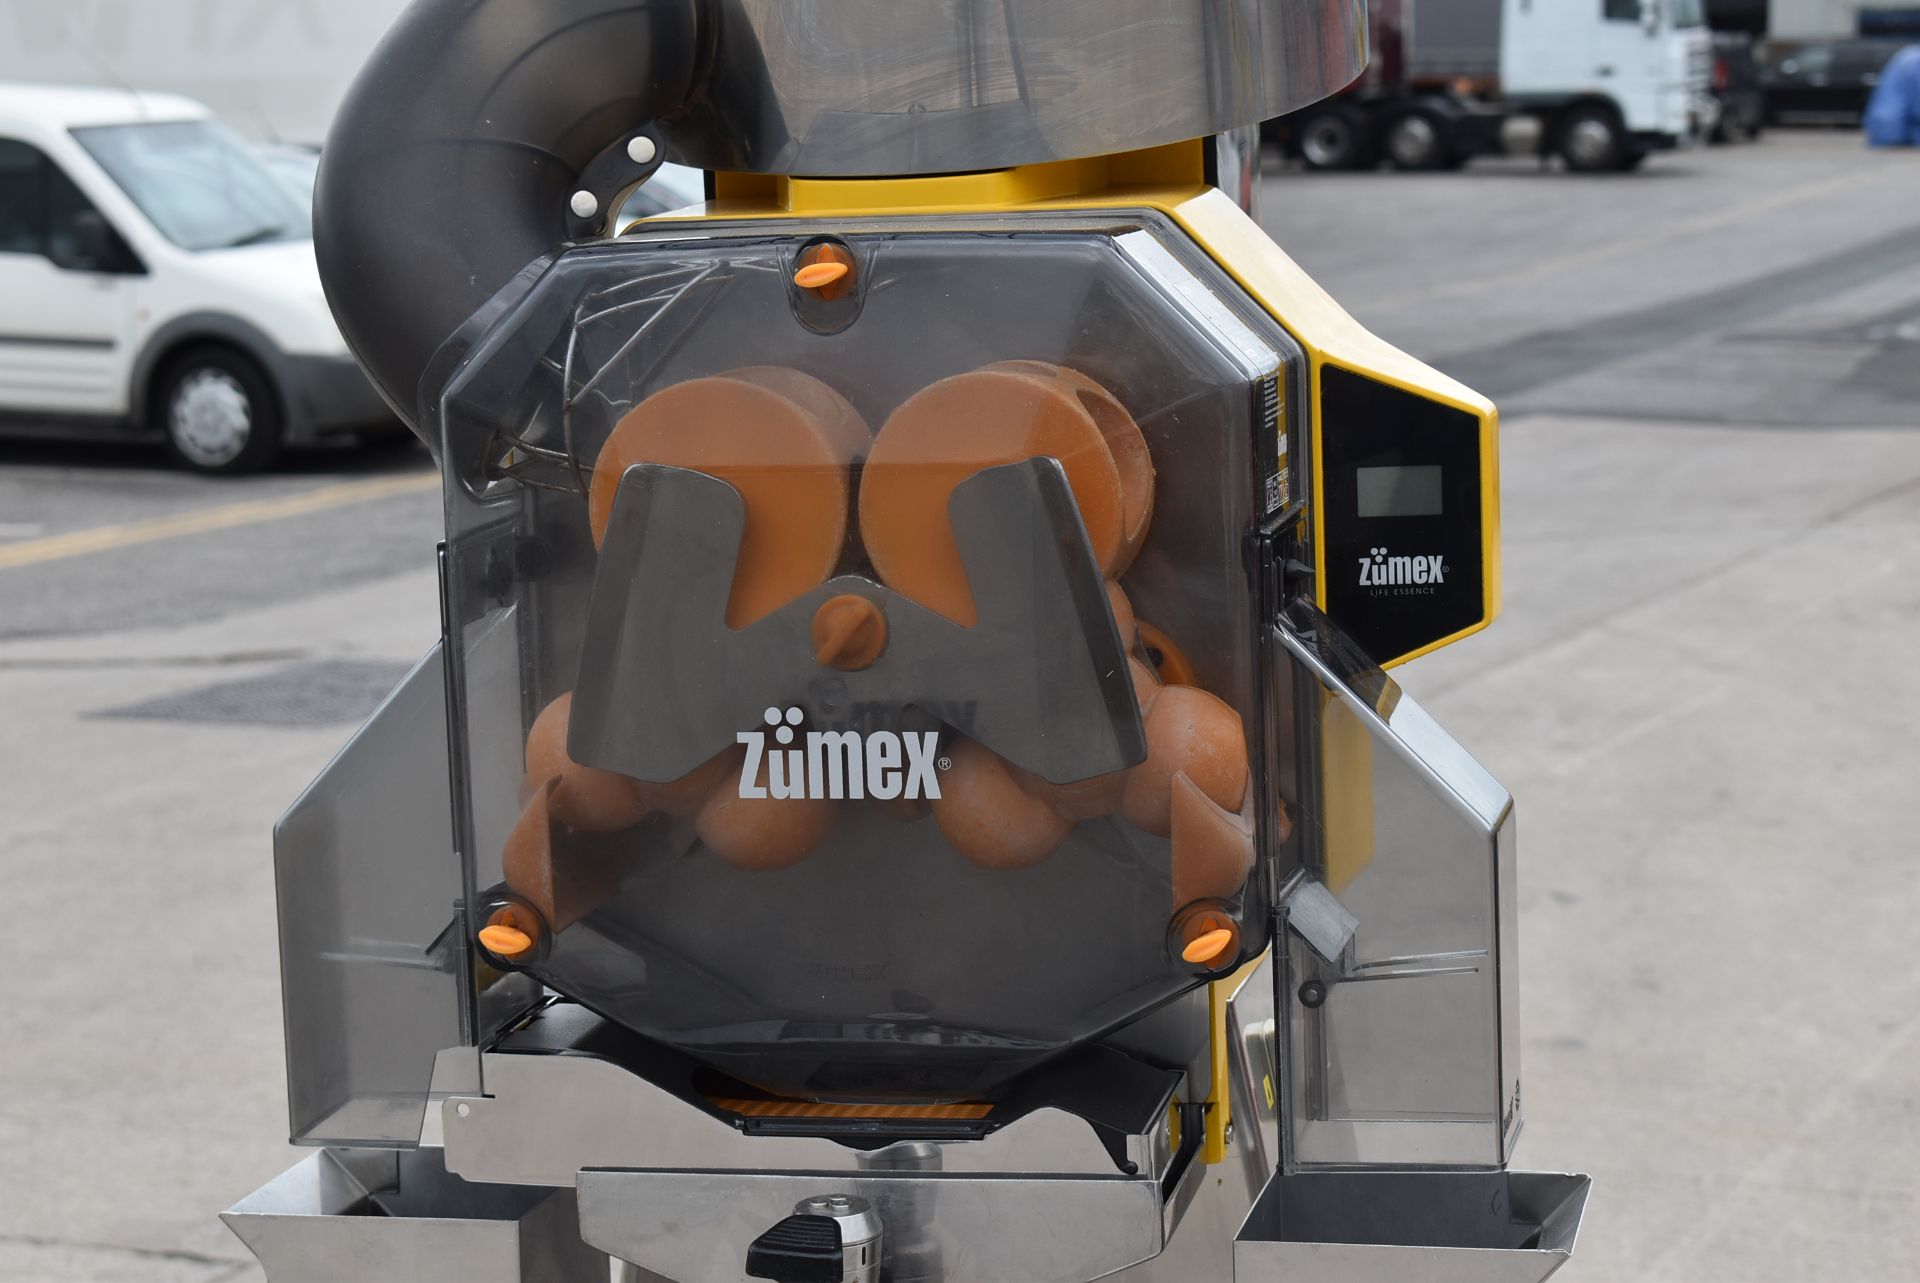 1 x Zumex Speed S +Plus Self-Service Podium Commercial Citrus Juicer - Manufactured in 2018 - - Image 2 of 5